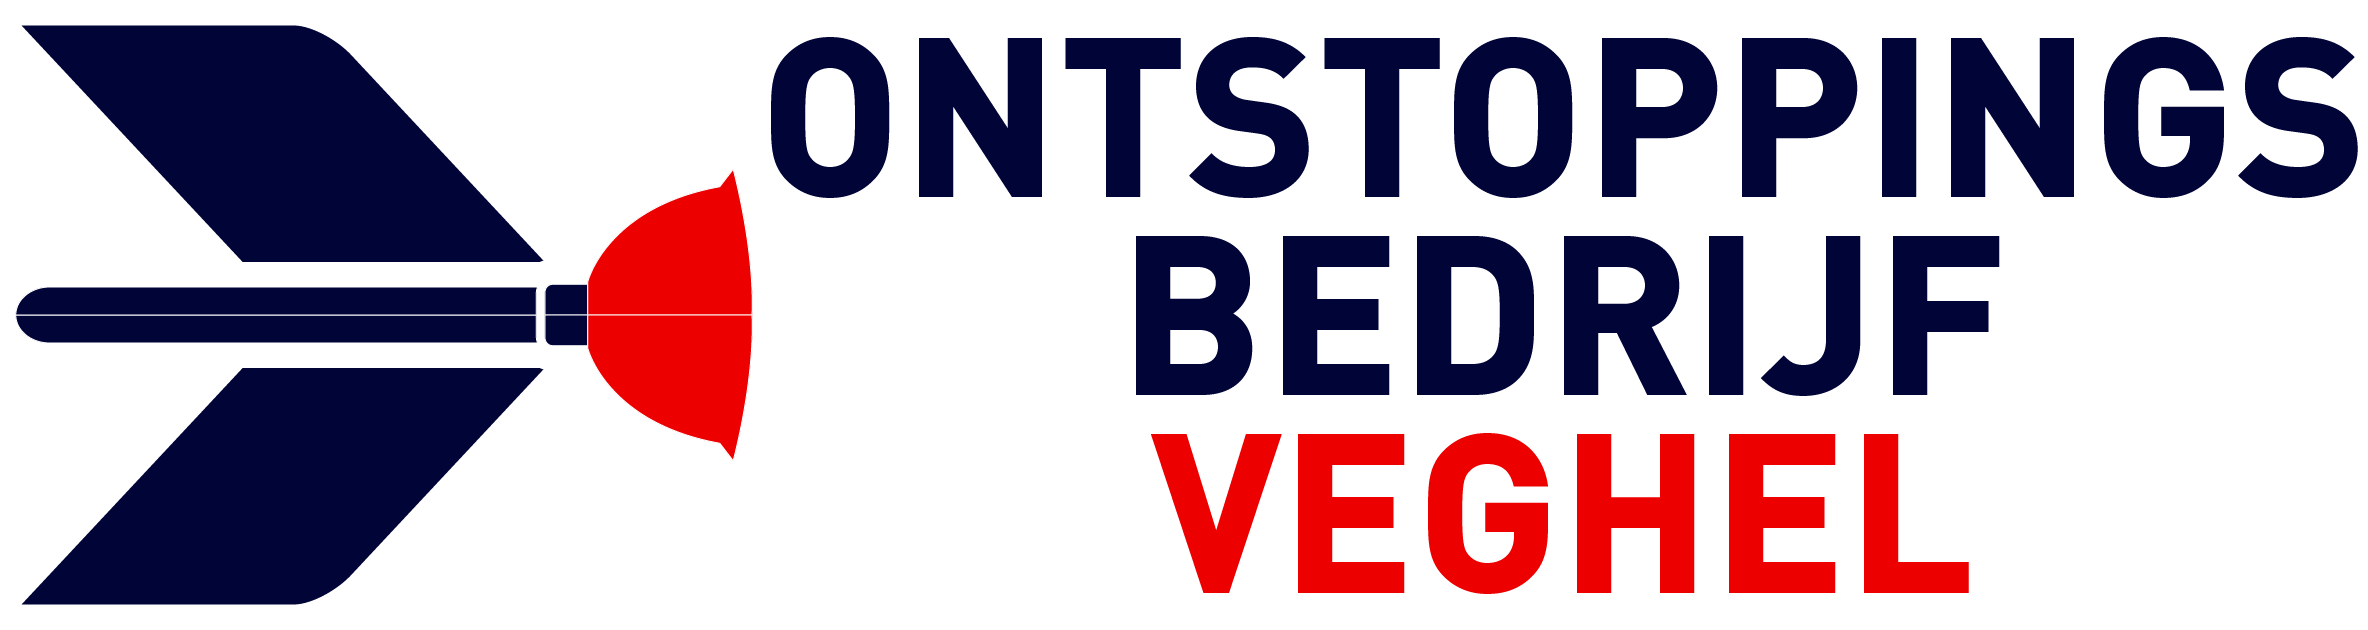 Ontstoppingsbedrijf Veghel logo